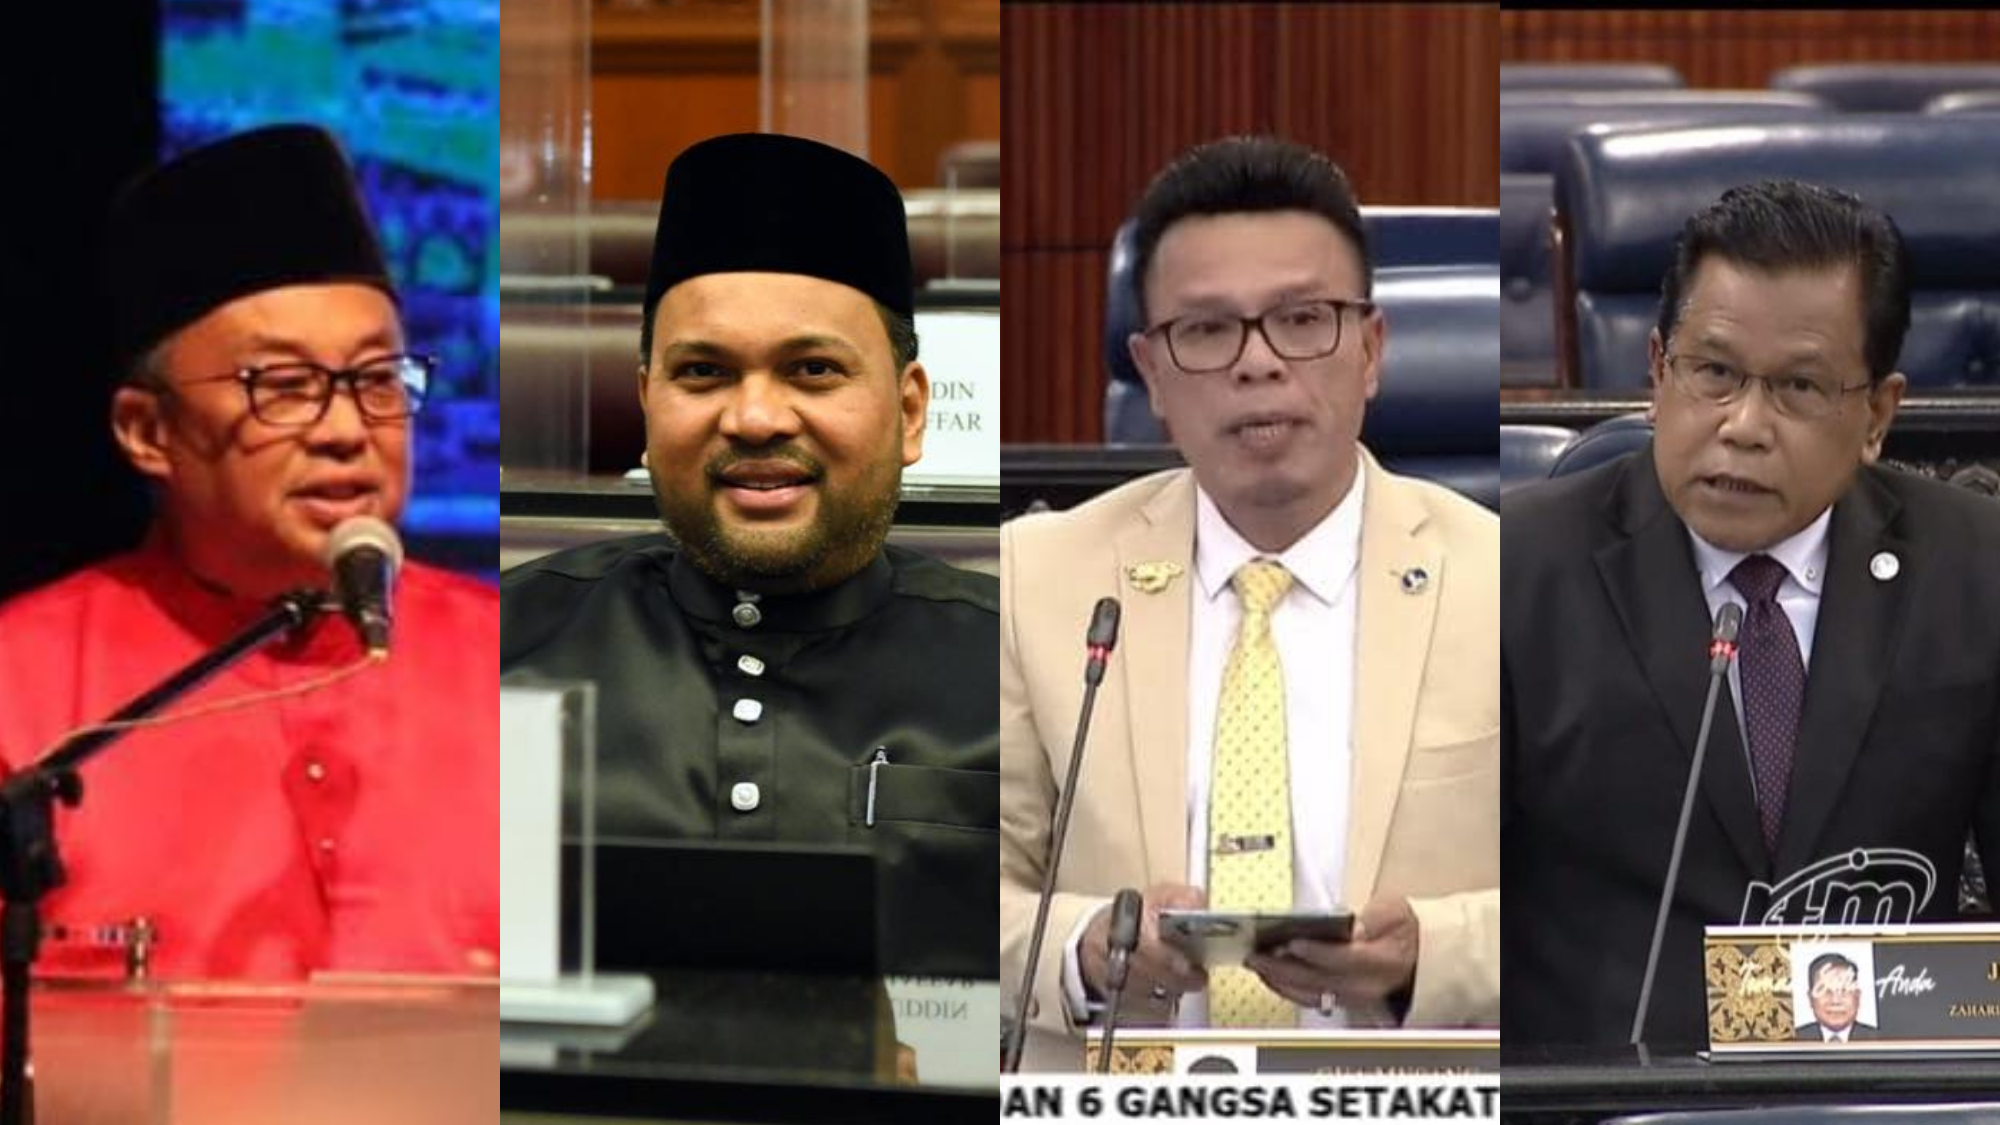 More Bersatu MPs will express support for Anwar: Umno veterans